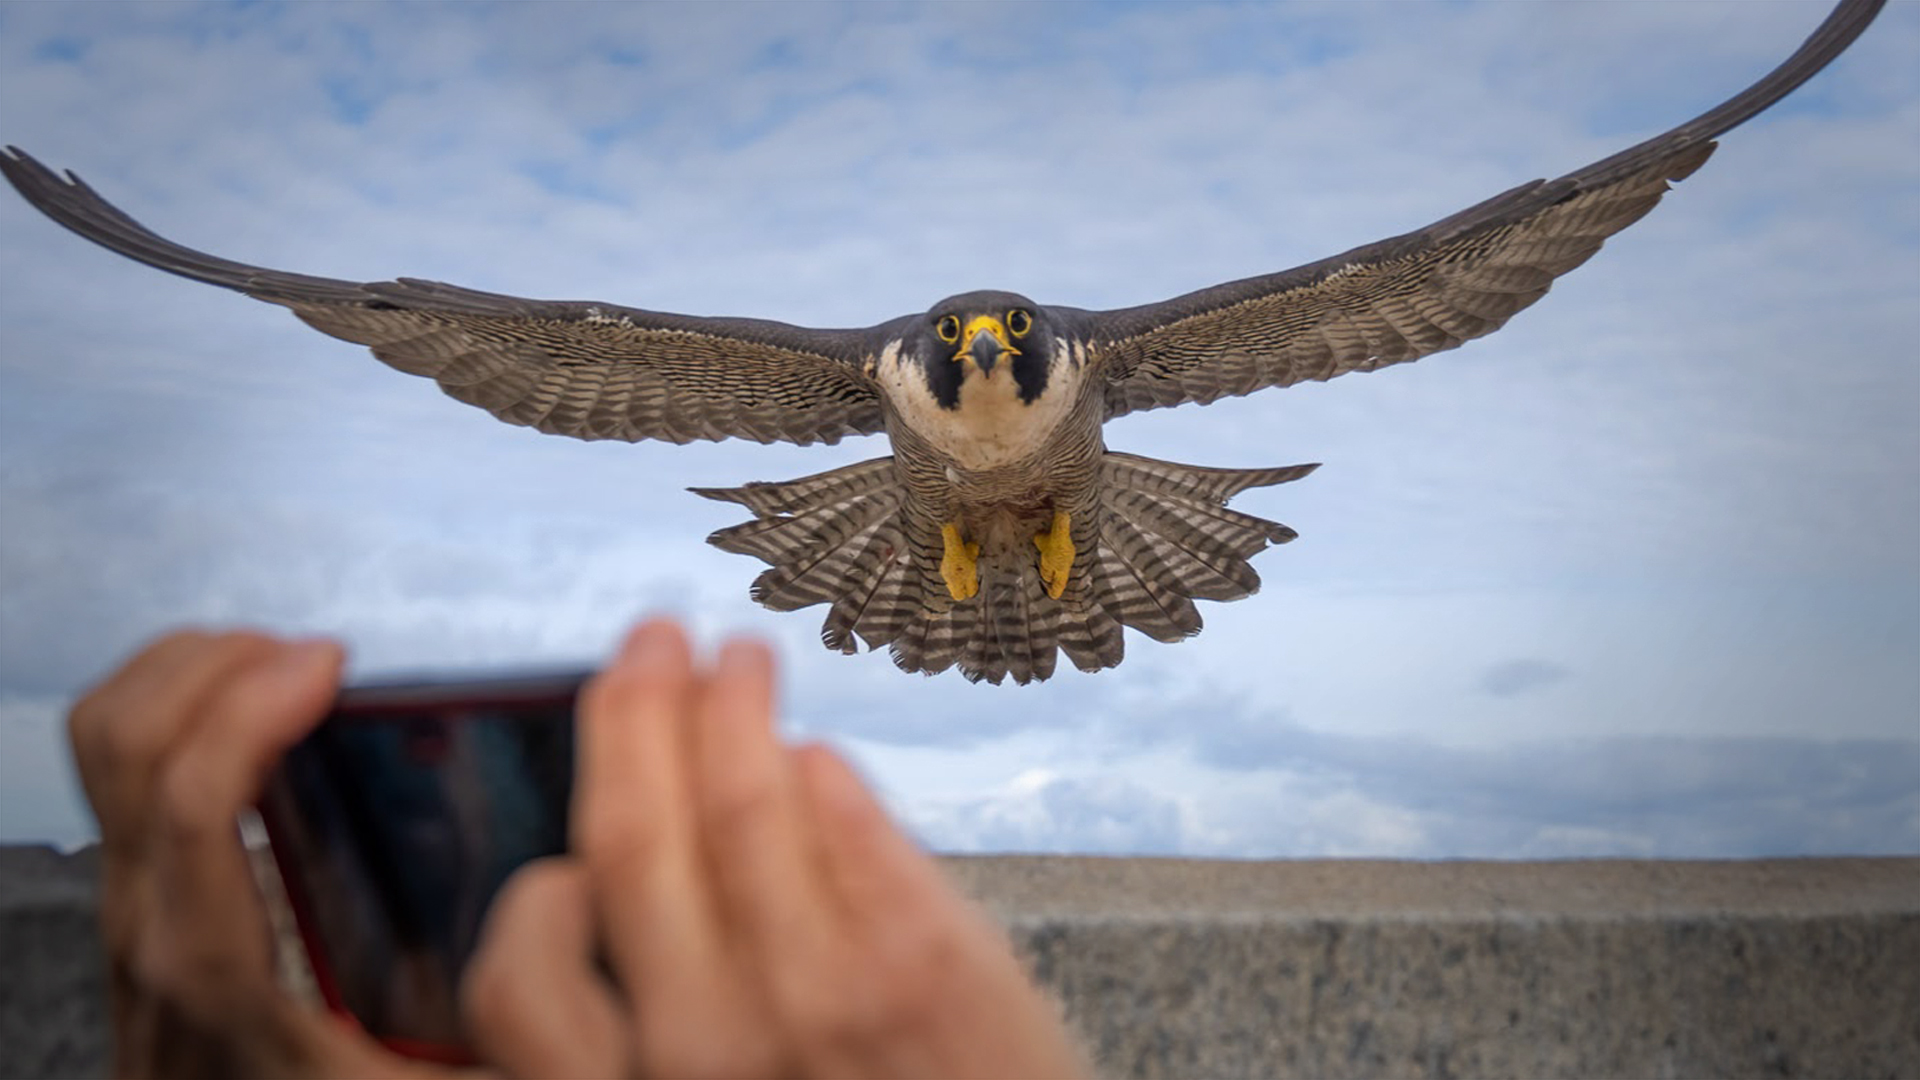 Peregrine falcon, Annie, flies toward a hand holding up an iPhone. Photo of Annie by Bridget Ahern